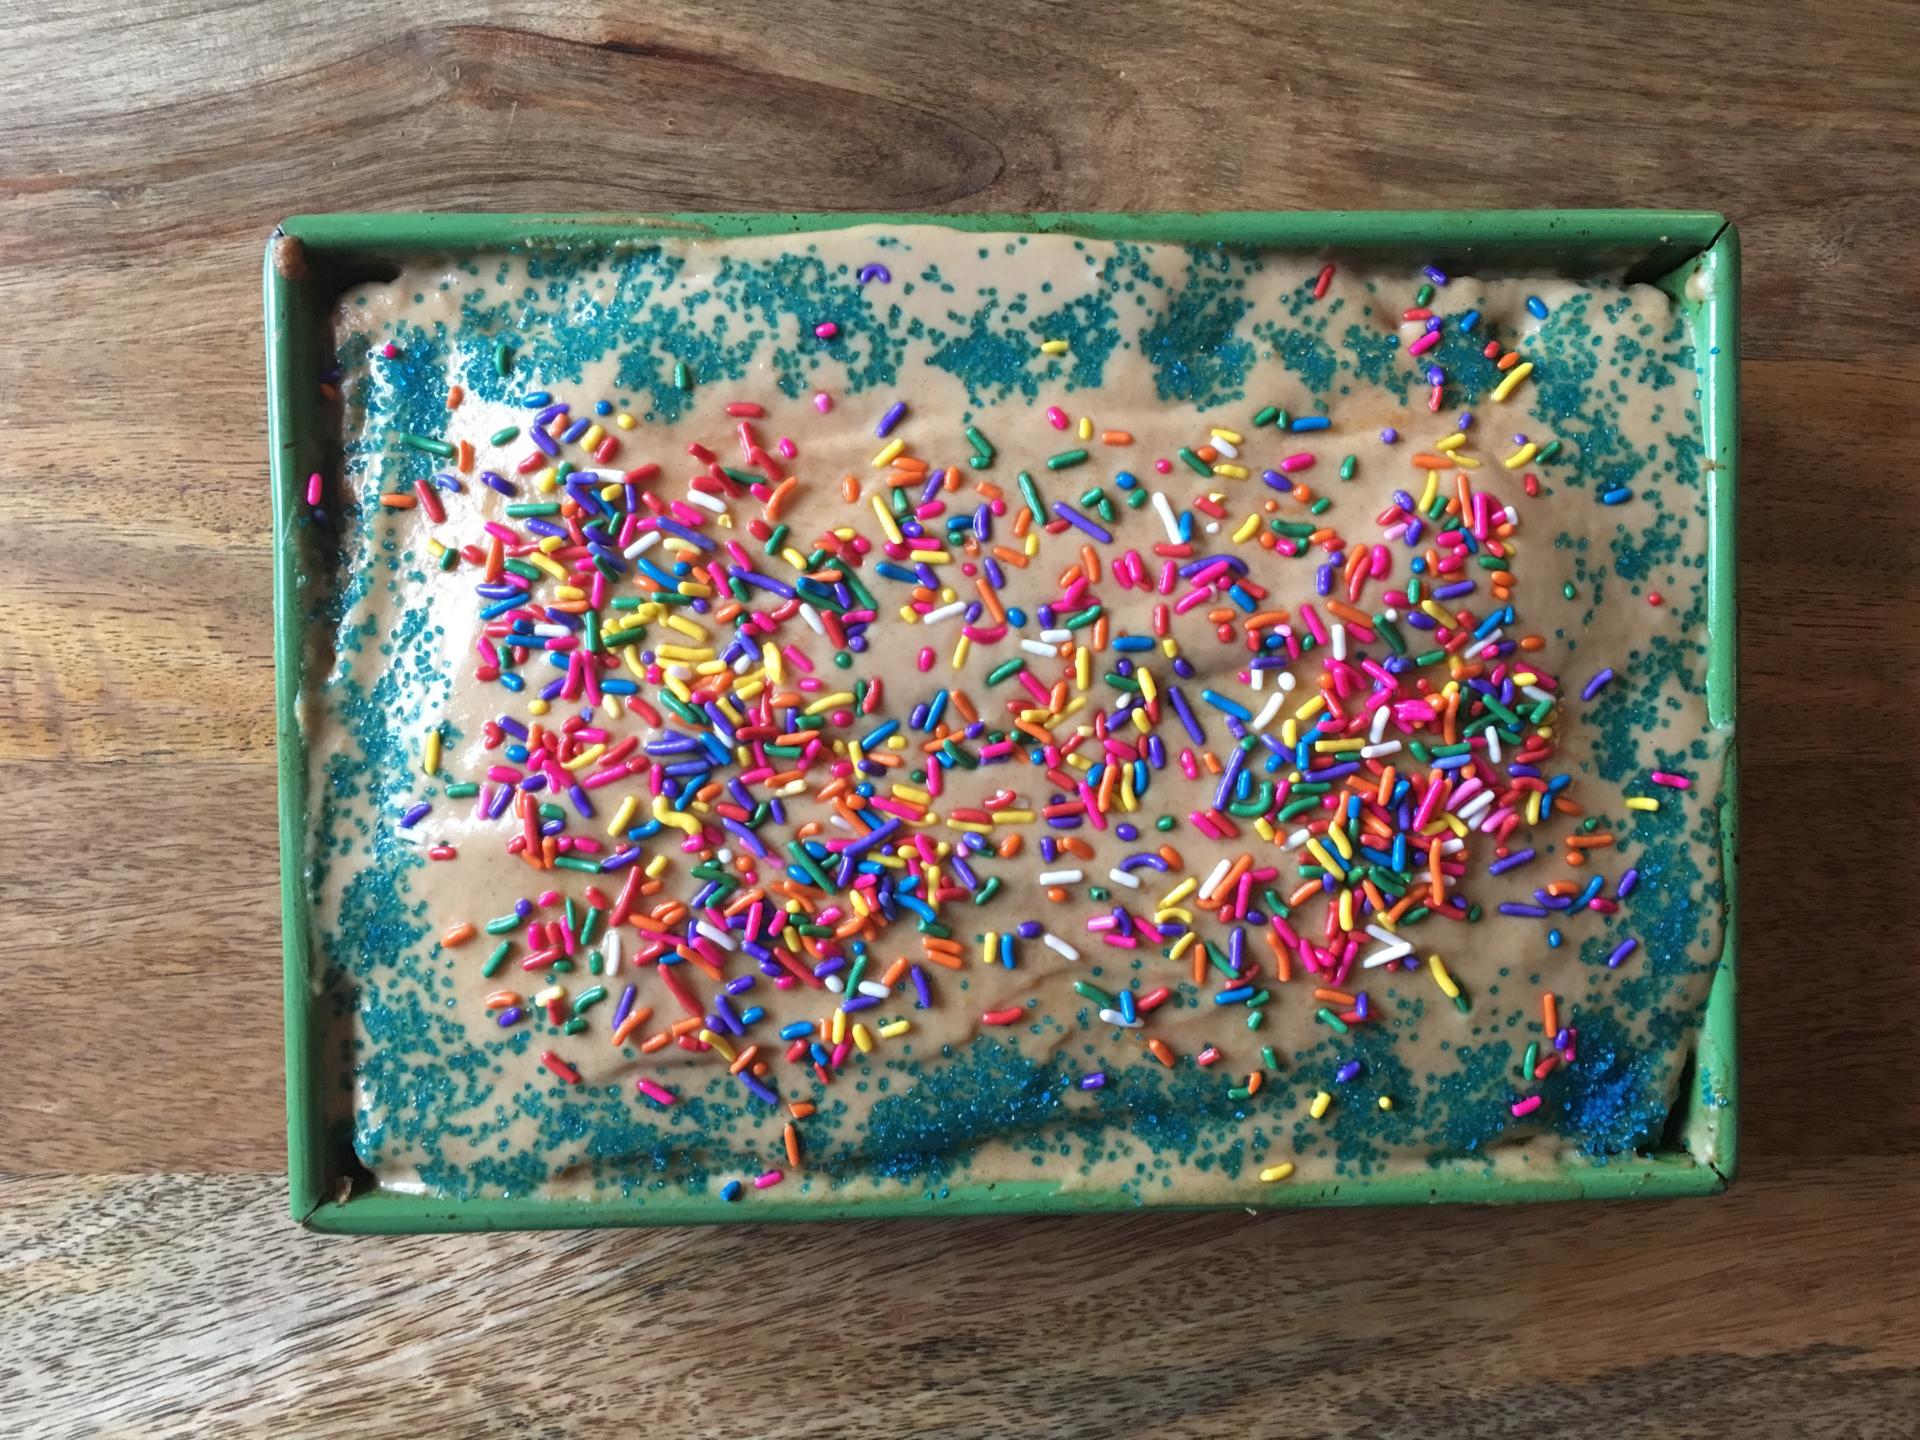 BAKE ME: Vanilla Birthday Cake with a Peanut Butter Glaze